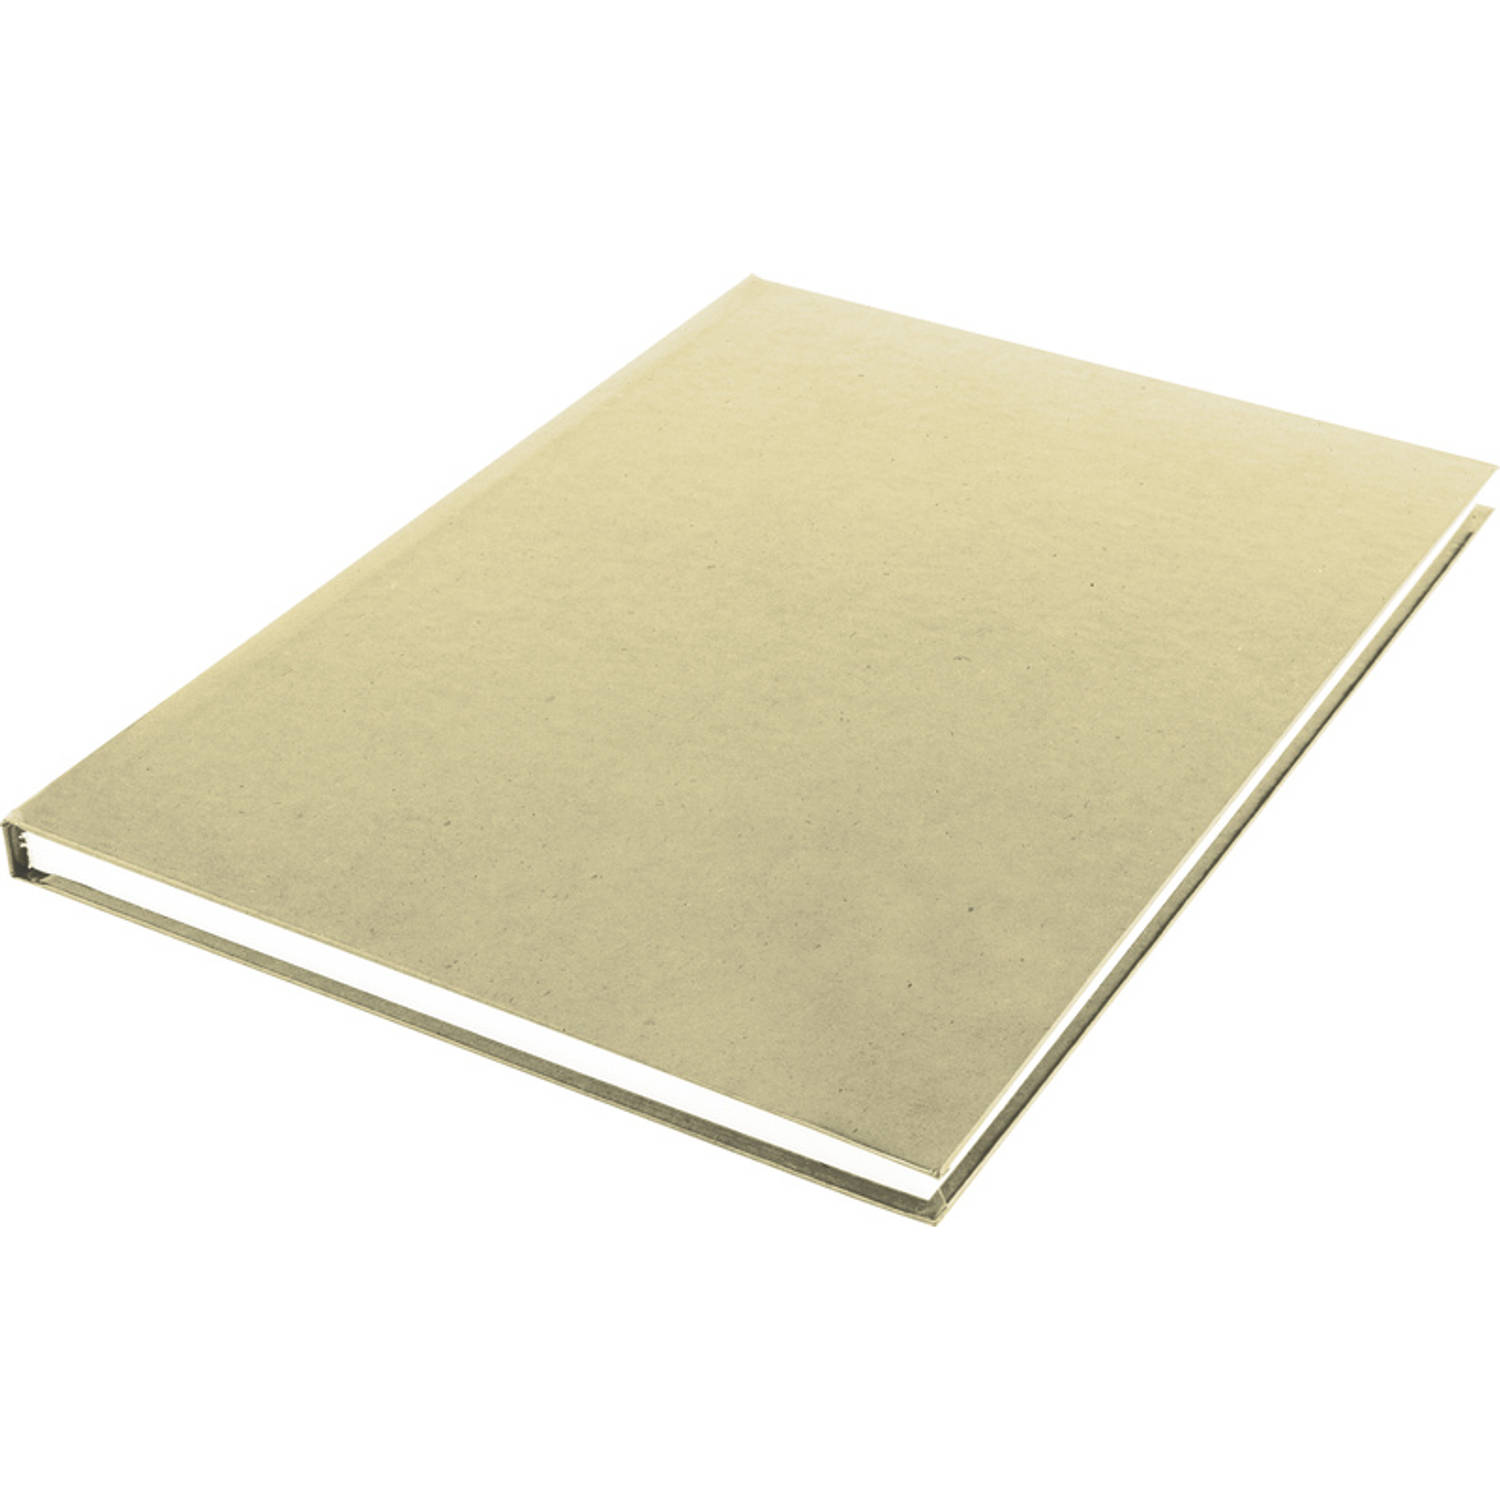 Notitieboek met harde kraft kaft A4 96 vel 70 grams papier, gelinieerd